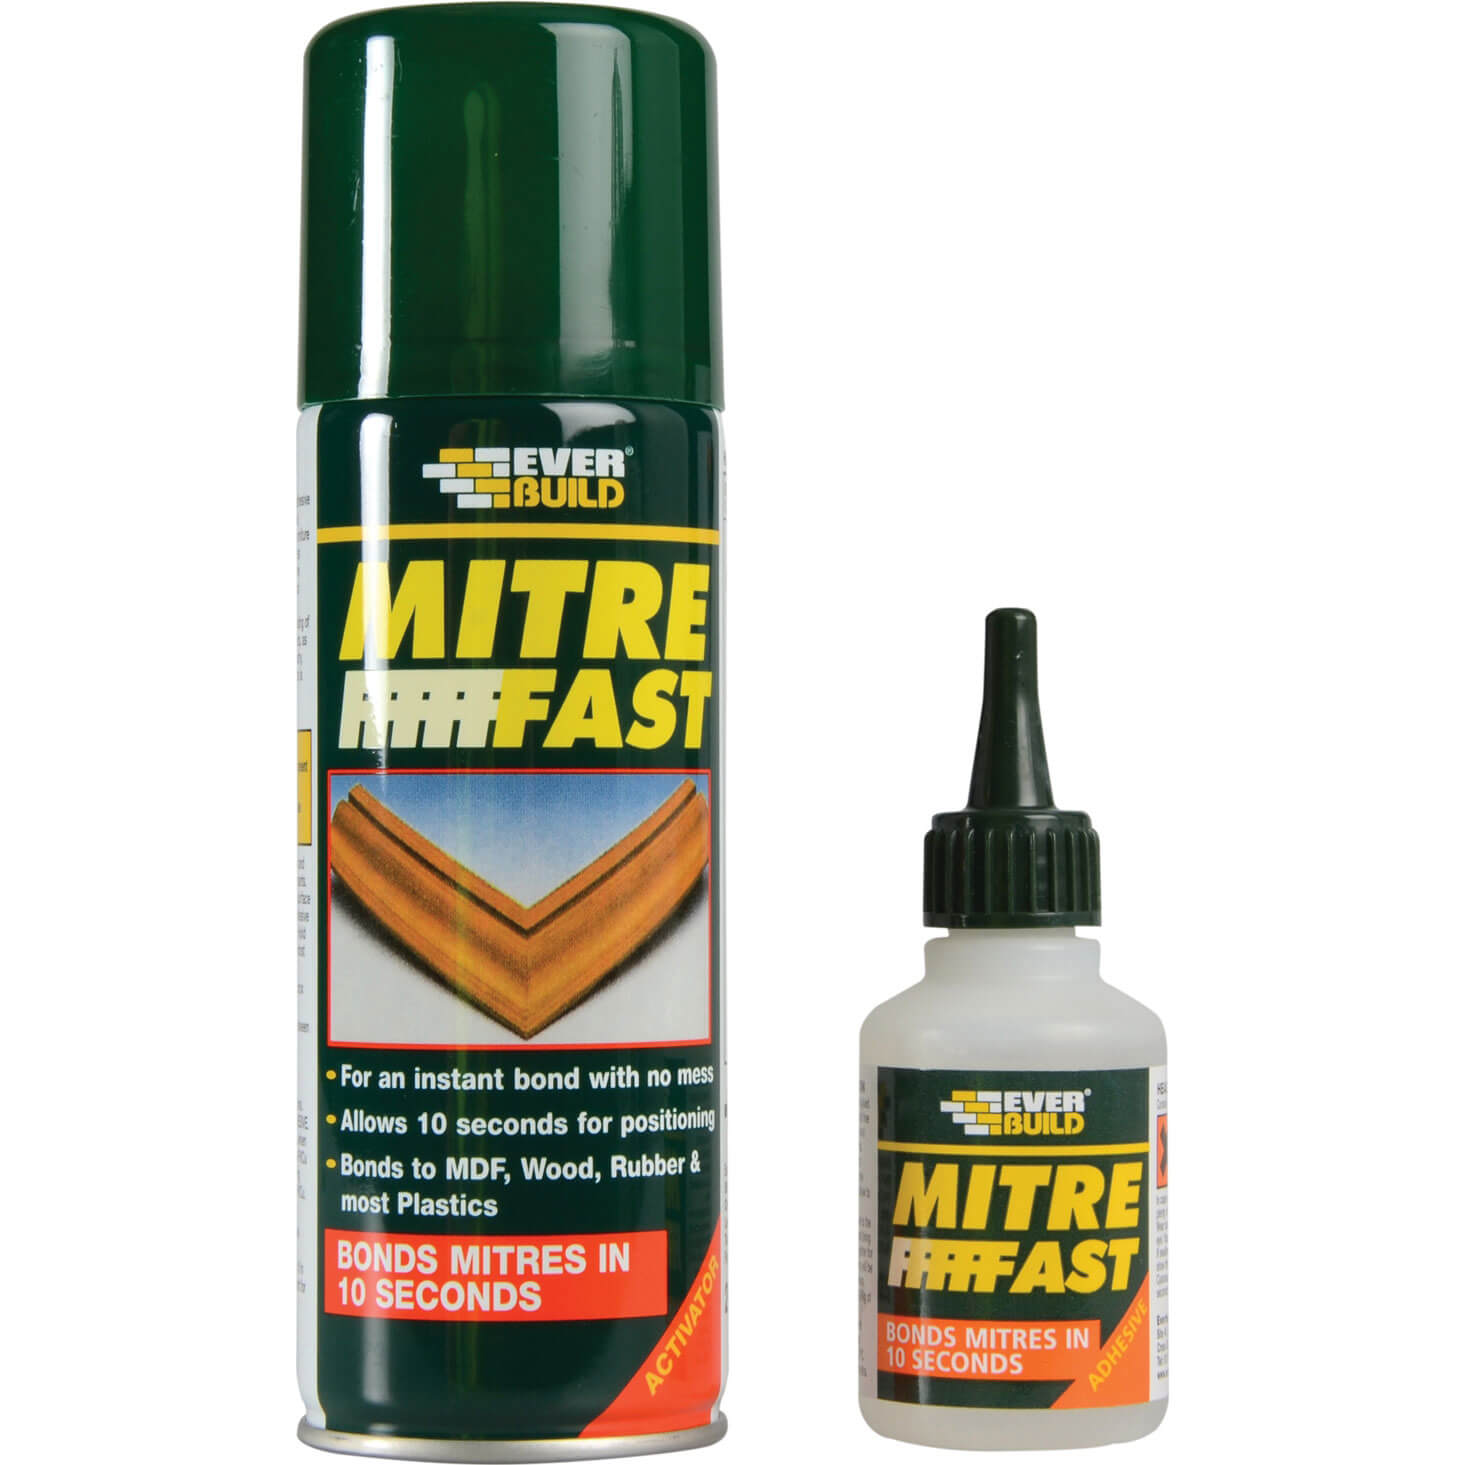 Everbuild Mitre Fast 50g Glue And Activator Bonding Kit